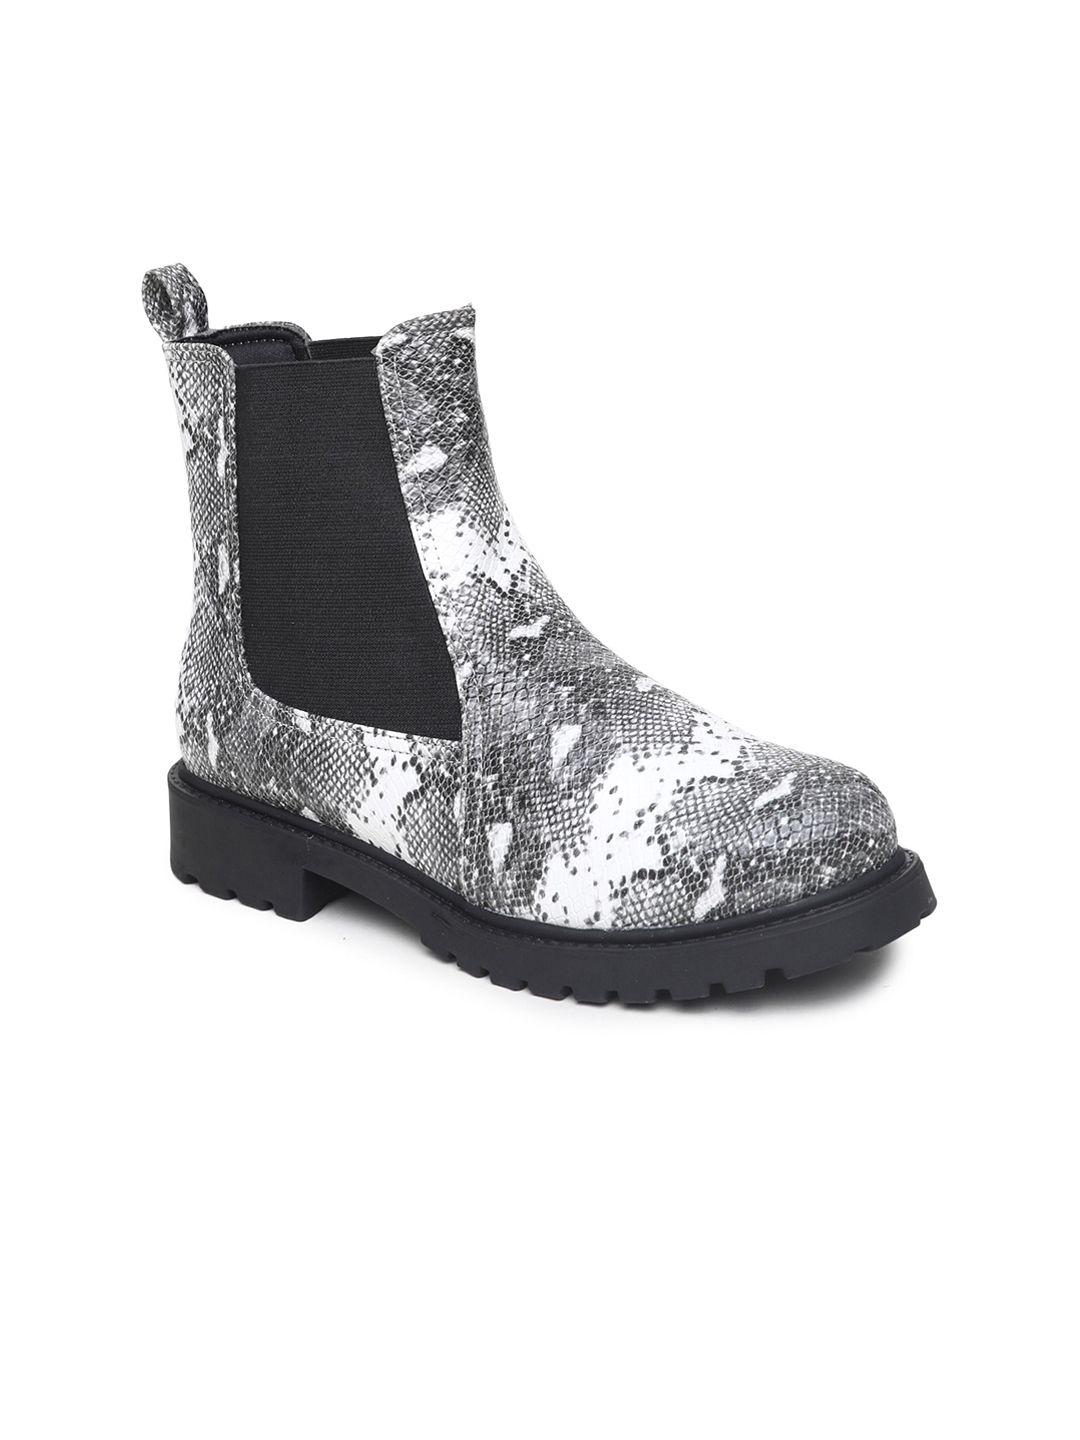 valiosaa women black & white textured chunky boots